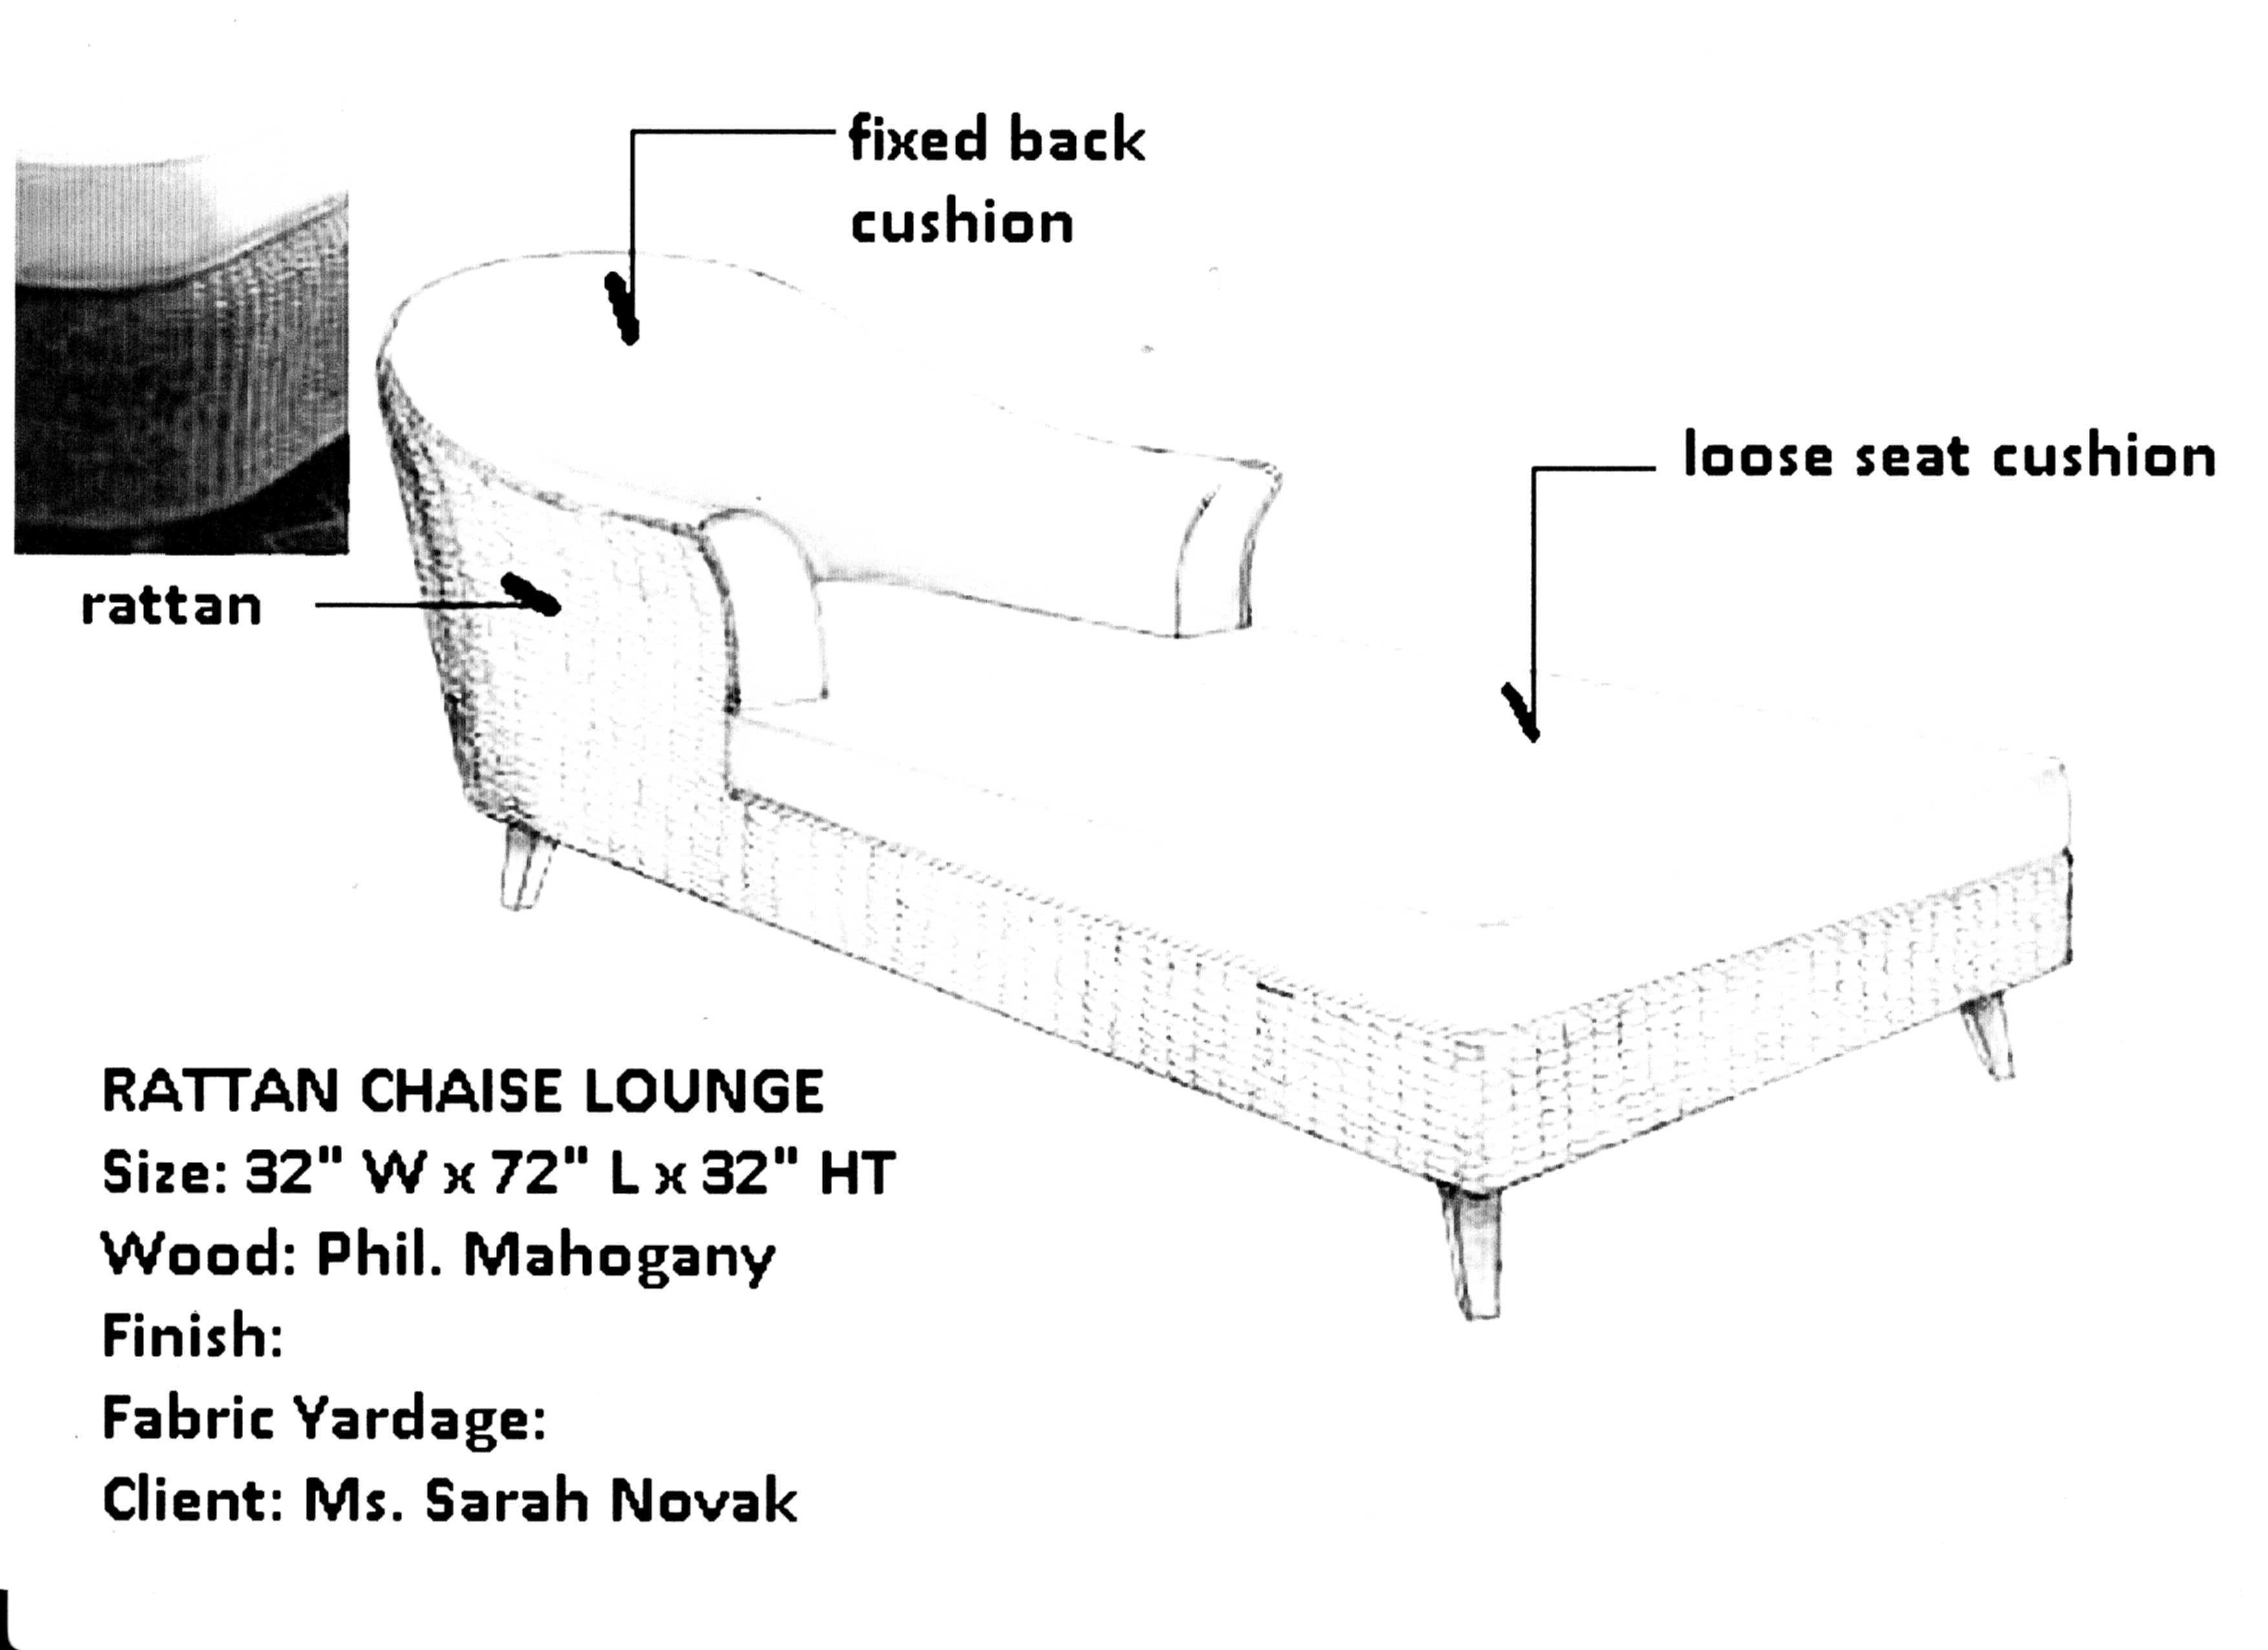 Rattan Chaise Lounge